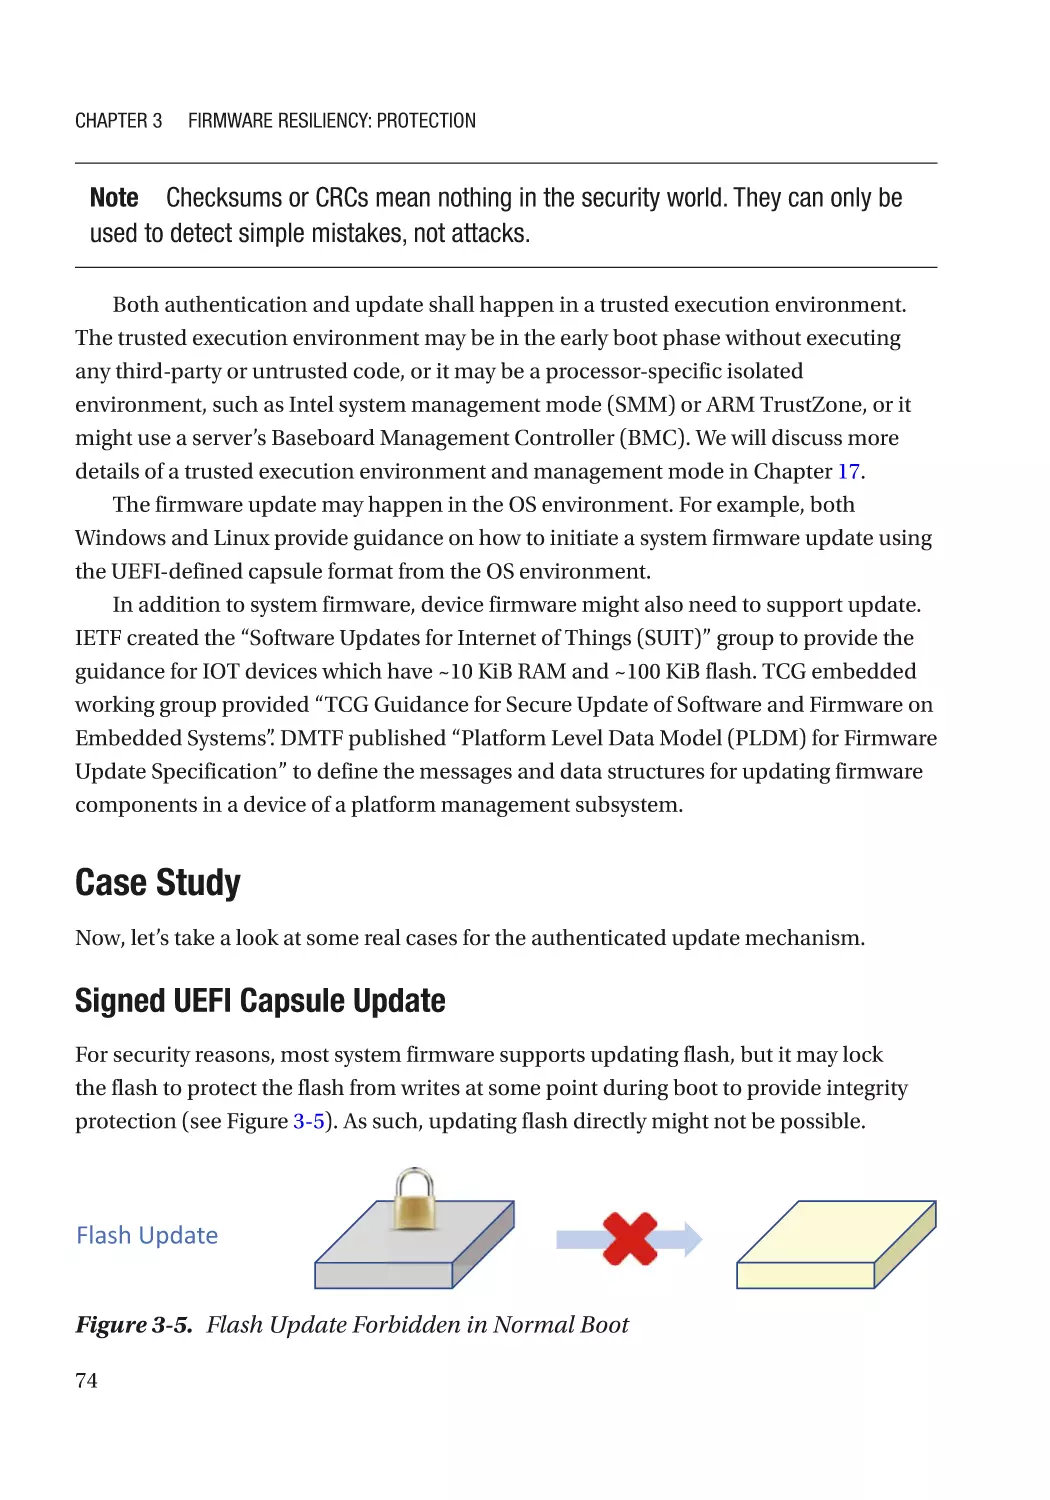 Case Study
Signed UEFI Capsule Update